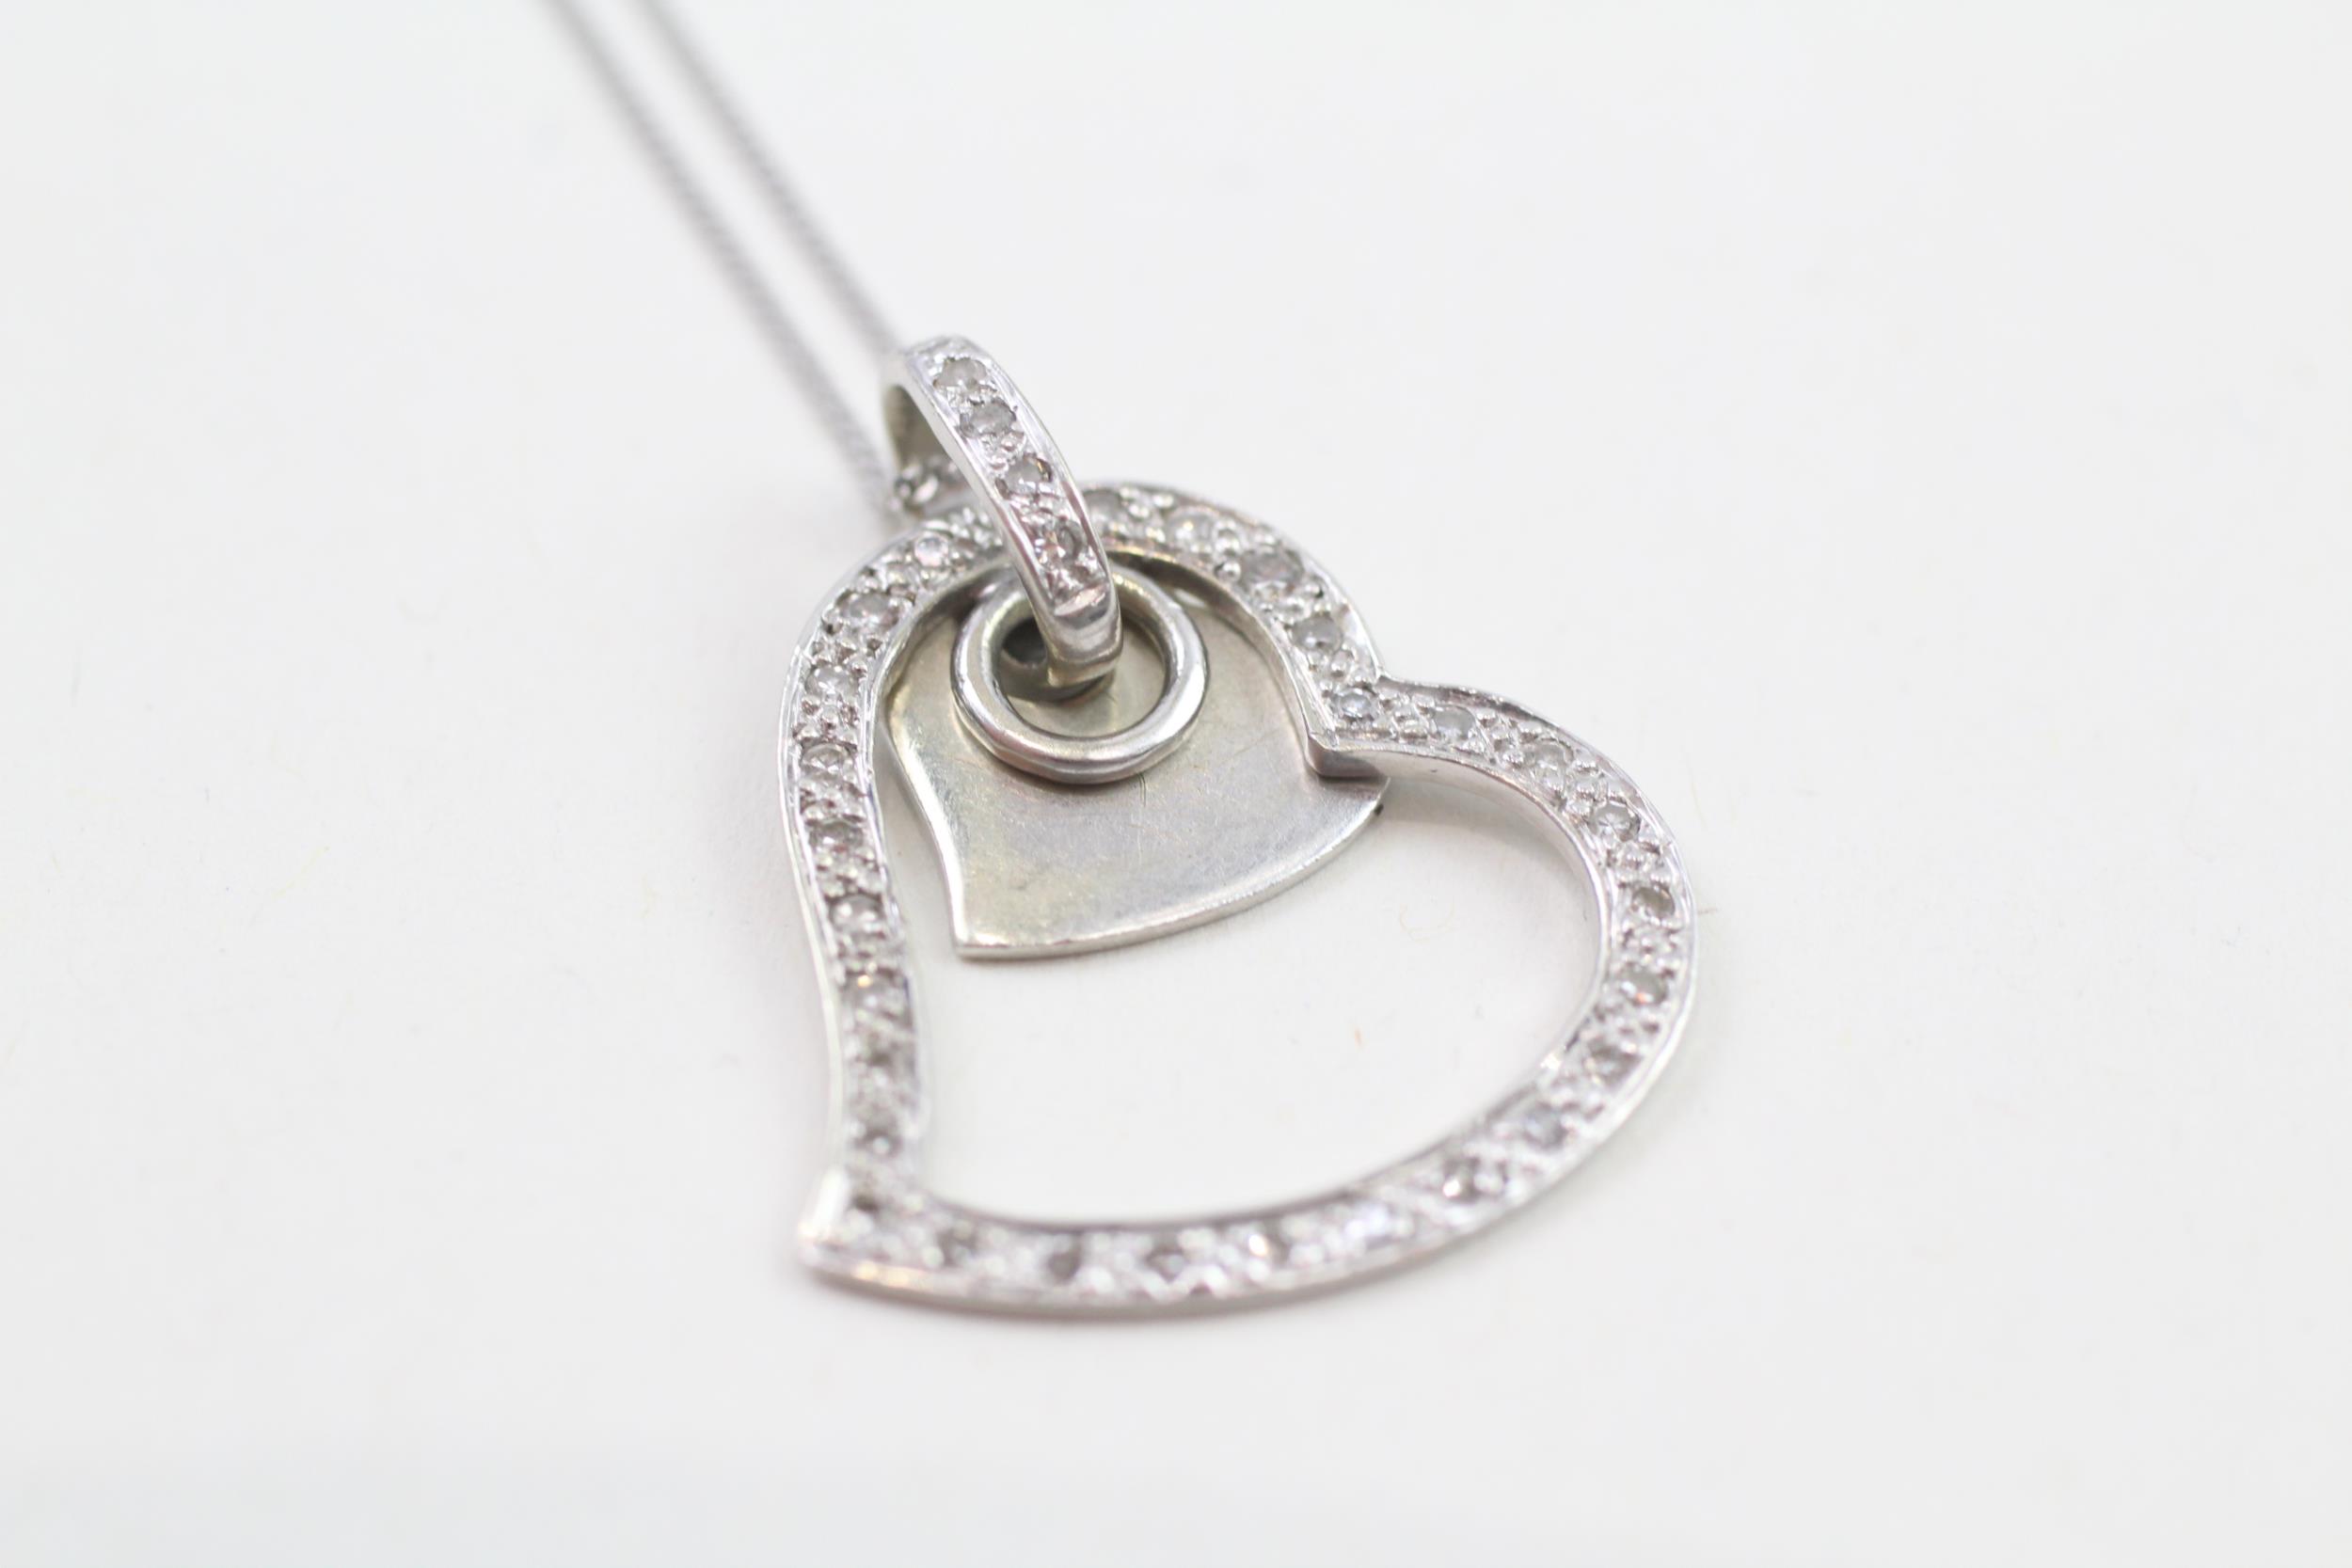 9ct white gold diamond double heart pendant necklace (3g)